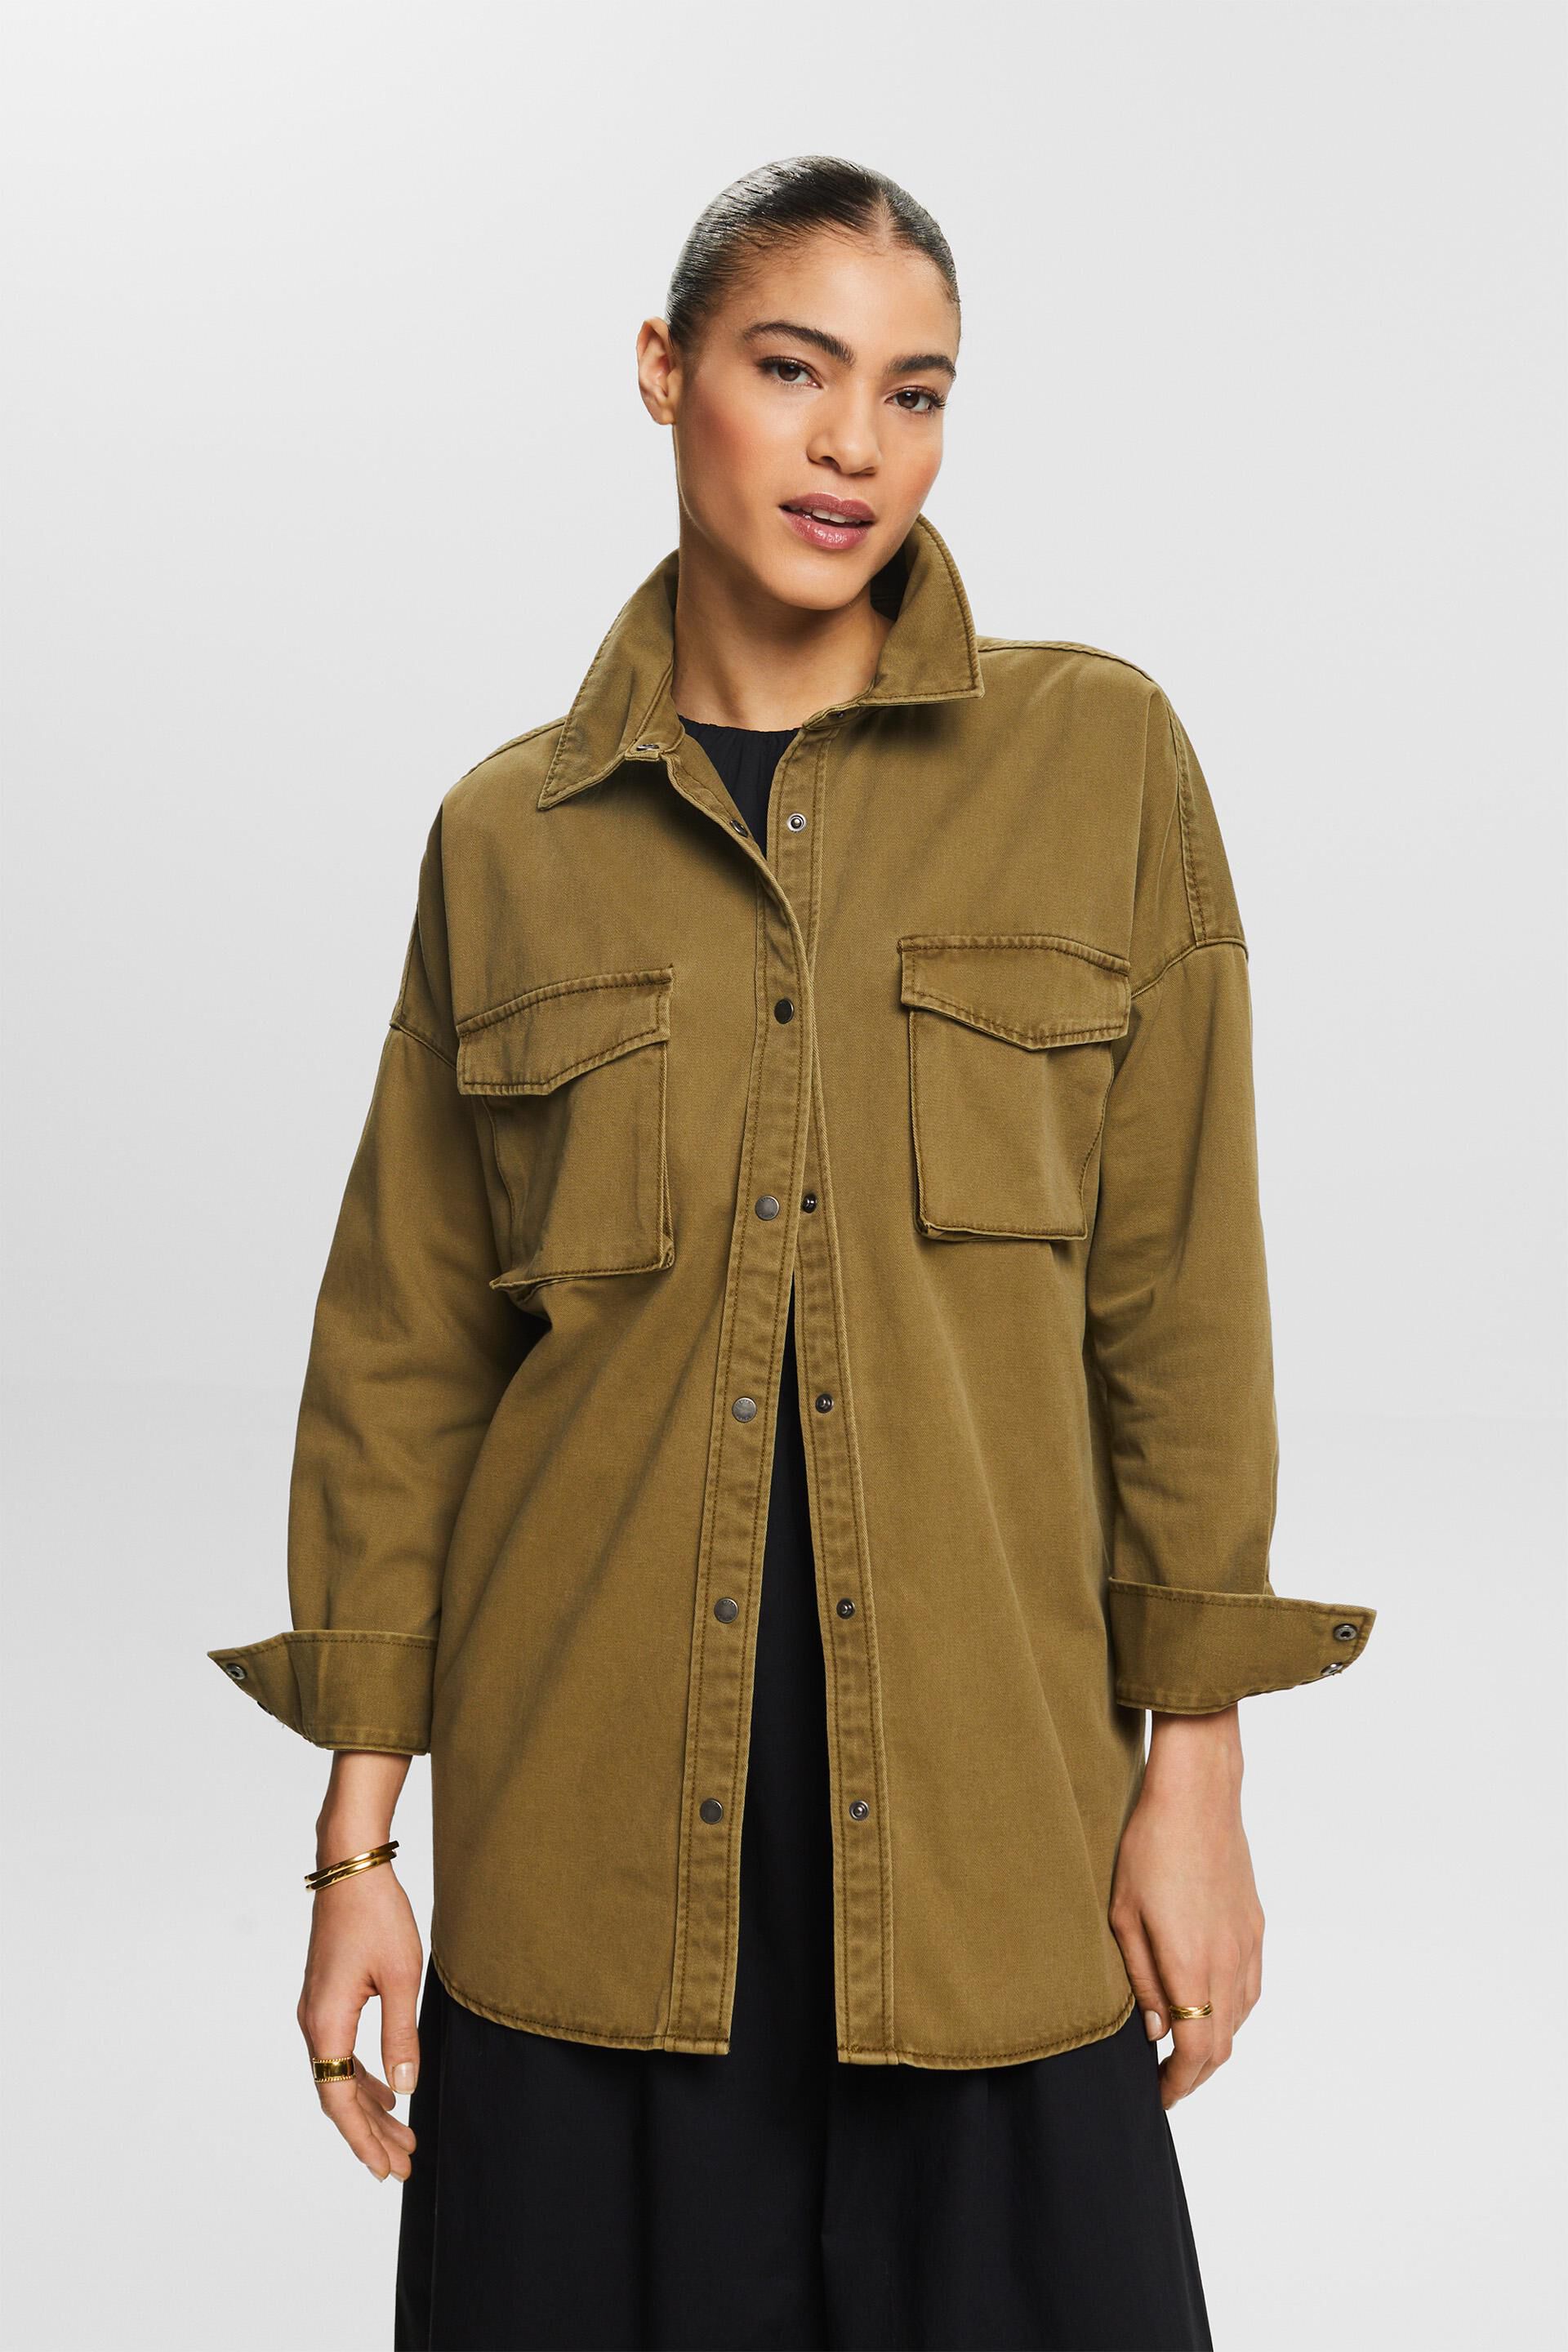 Buy Beyove Women's Corduroy Shirt Long Sleeve Button Down Shacket Jacket  Casual Oversized top with Pockets, Light Khaki, Medium at Amazon.in